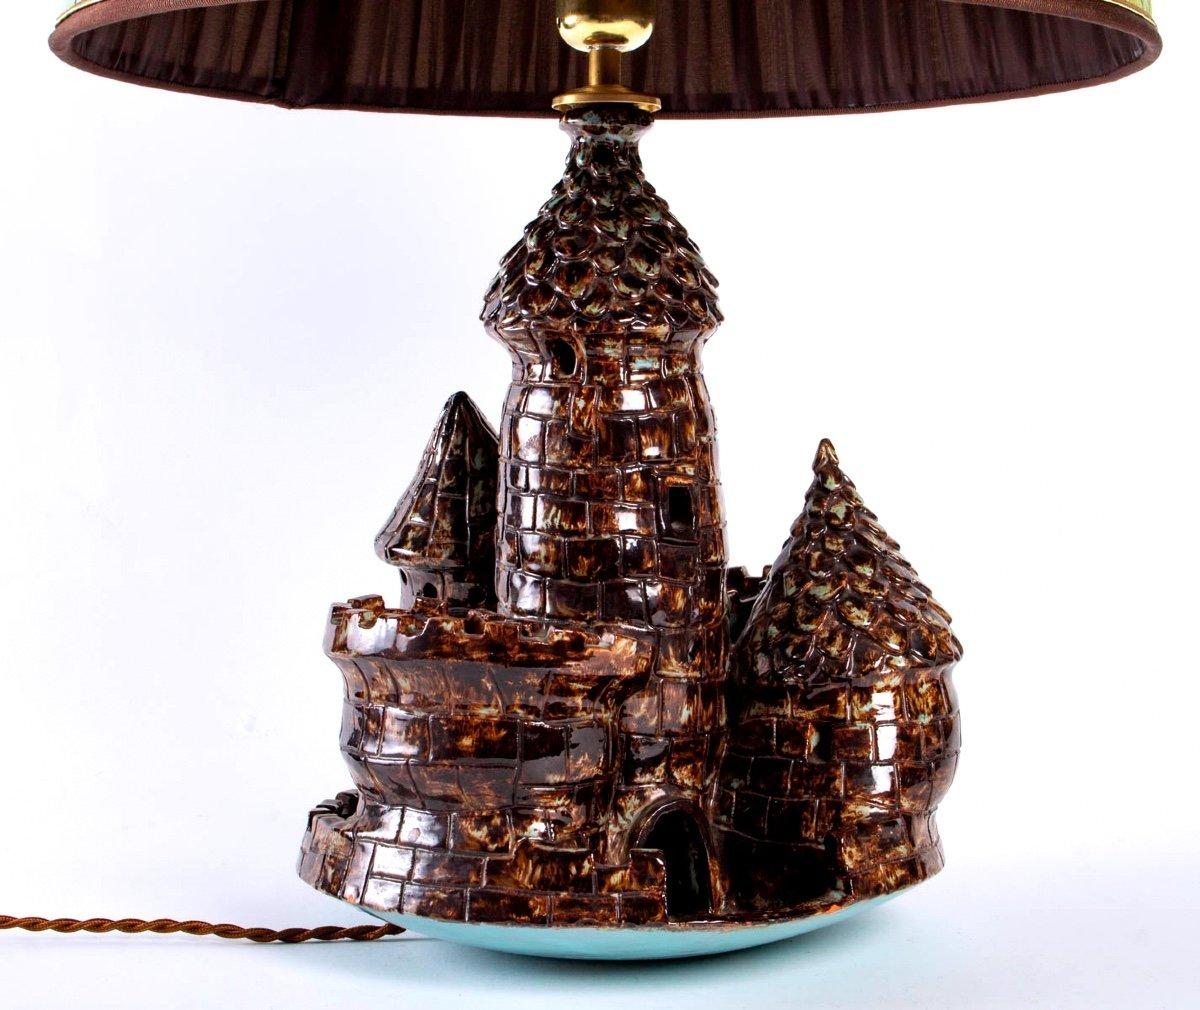 Ceramic lamp PRIMAVERA
Ceramic base representing a medieval castle.
Period: 20th century
Circa: 1950-1955
Dimensions: total height: 63cm
Base: height: 33 cm x length: 25 cm
Shade dimensions: height: 28,5 cm - top width: 28,5 cm - bottom width: